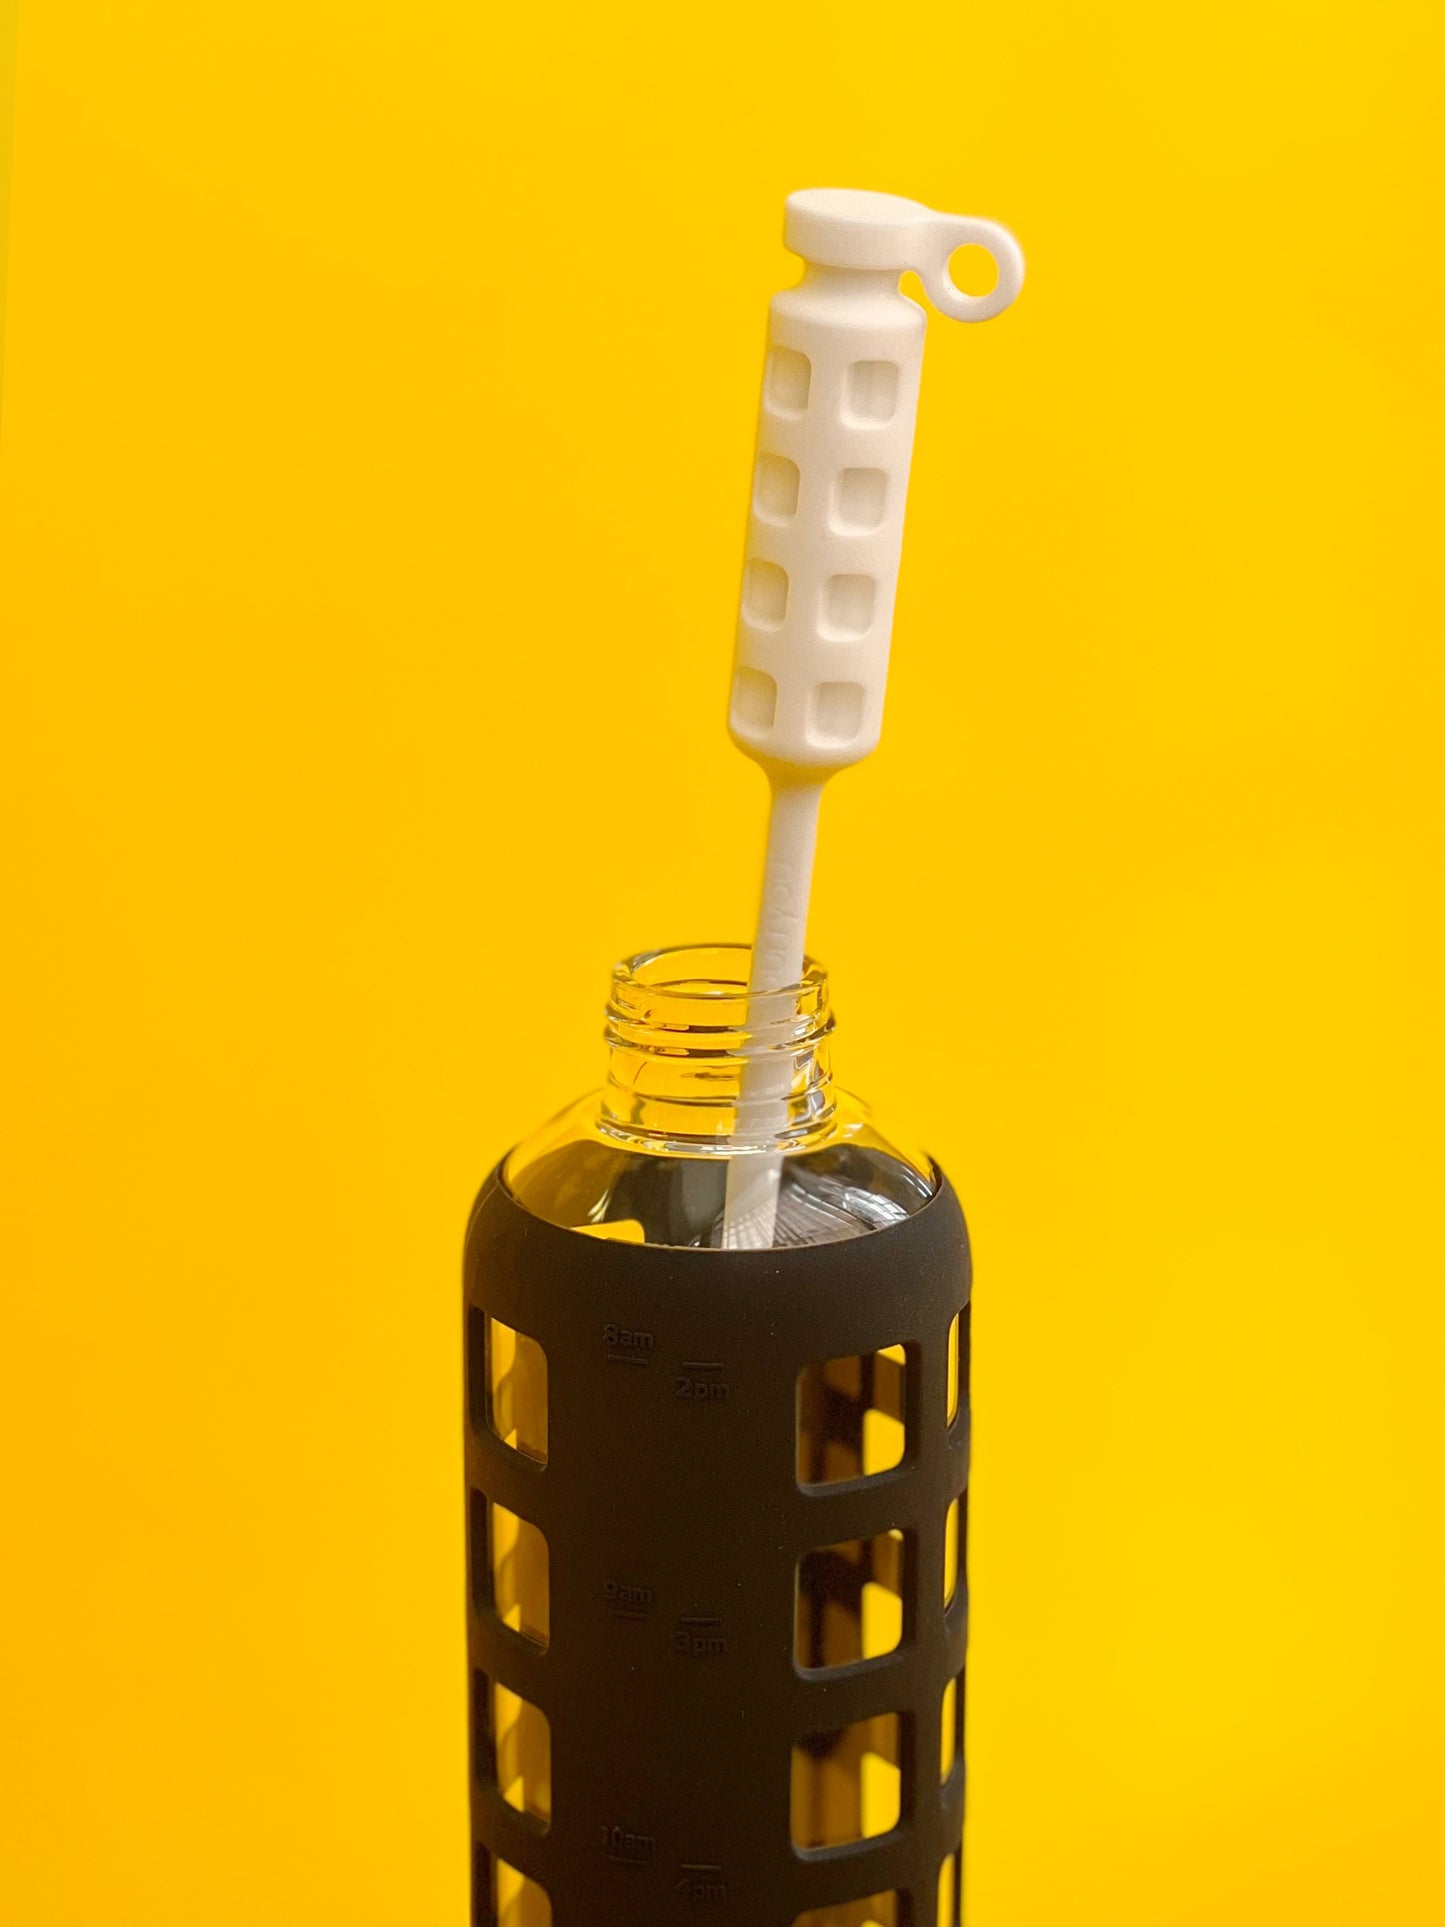 purifyou Premium Reusable Silicone Bottle Brush (Set of 2)